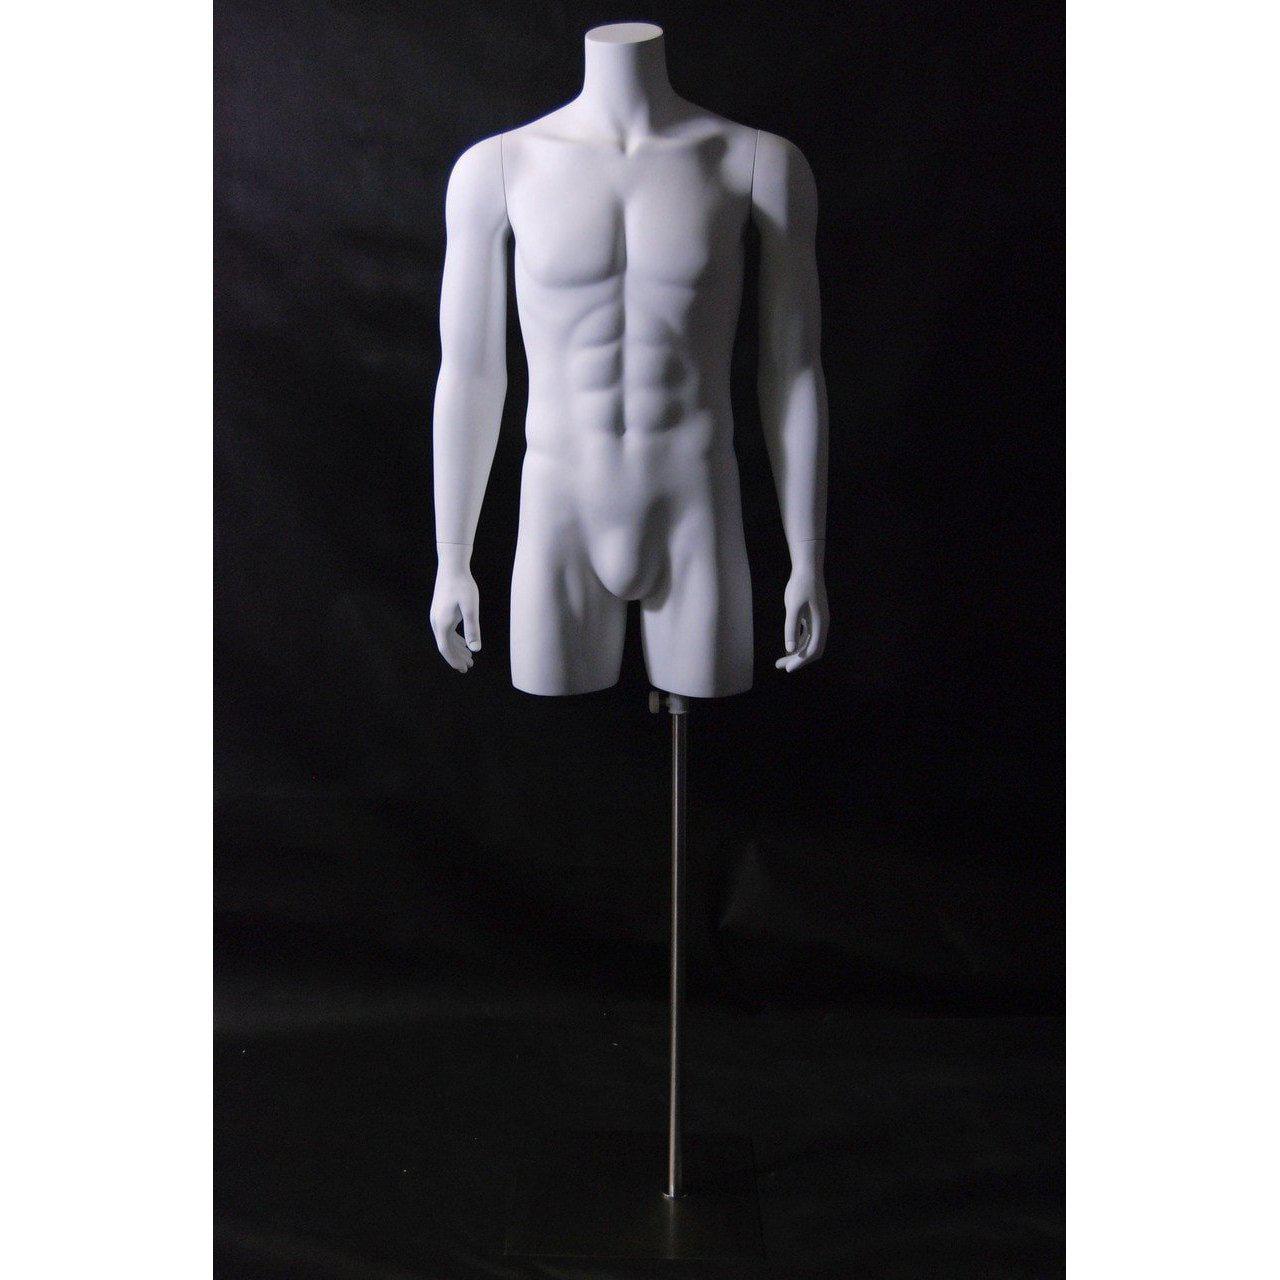 Glossy Male Full Body Mannequin In White In Austin & Dallas Texas